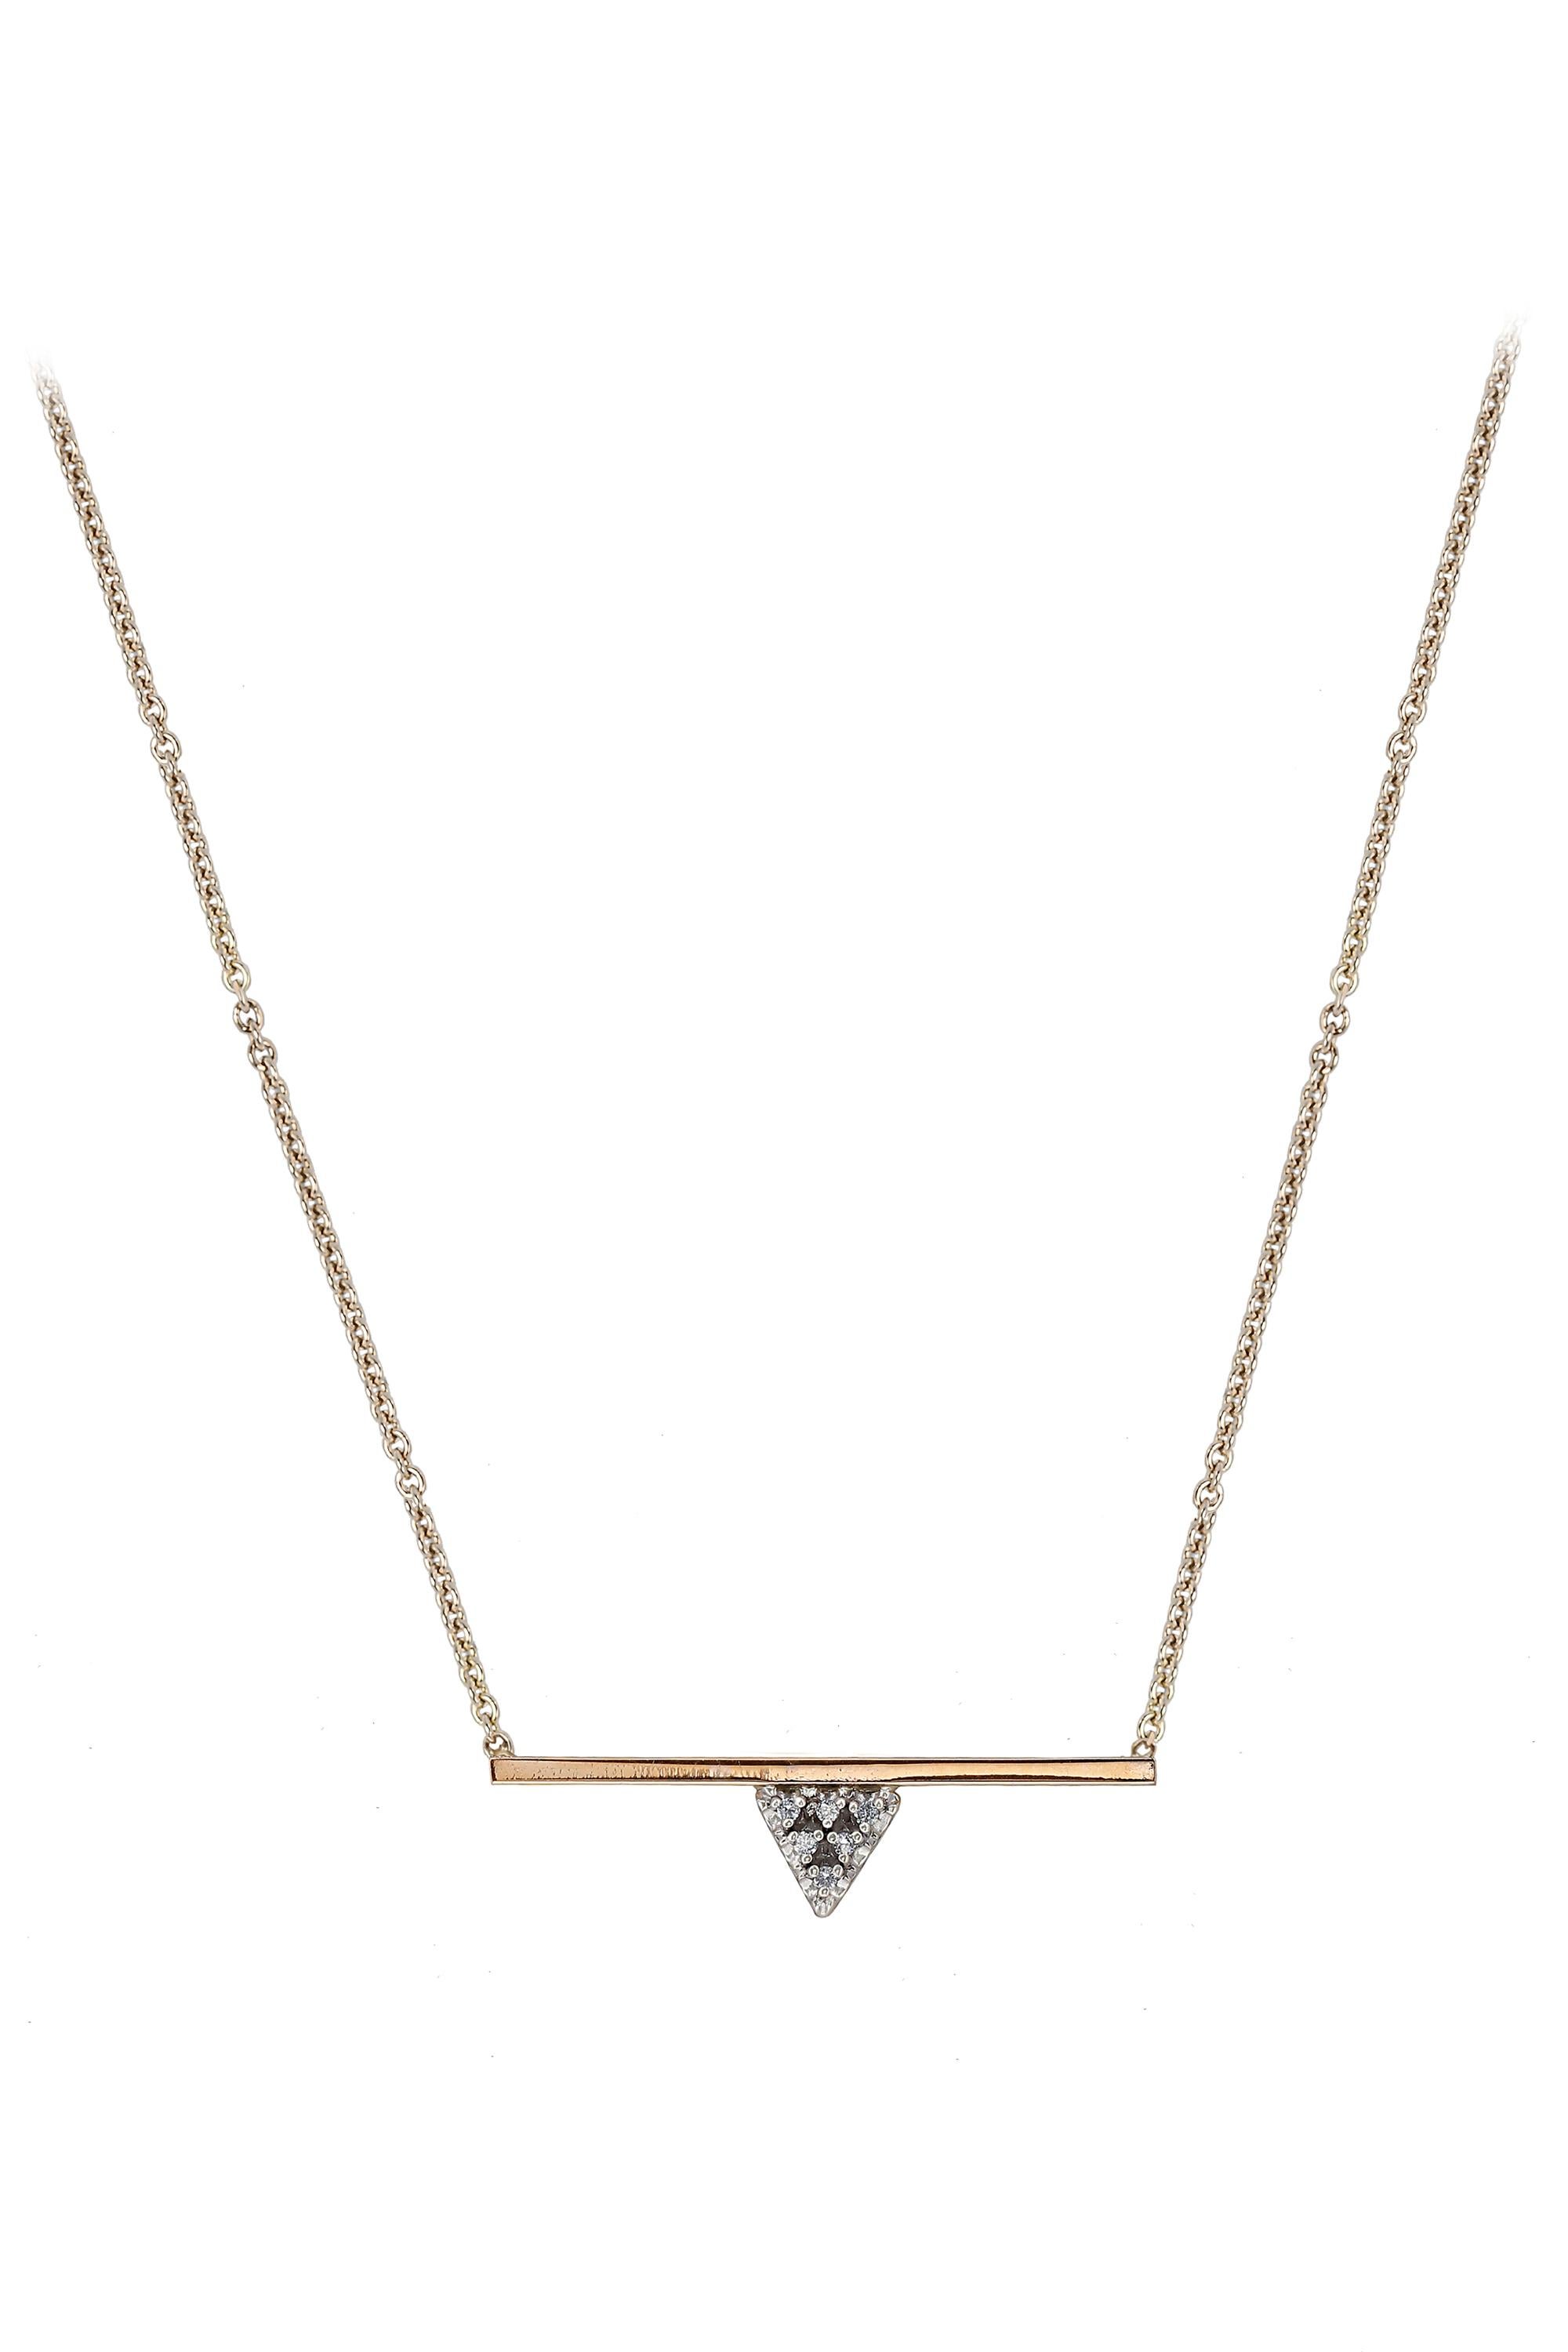 Rough Cut 14k Gold Zoë Chicco Bar Triangle Diamond Pendant Necklace For Sale